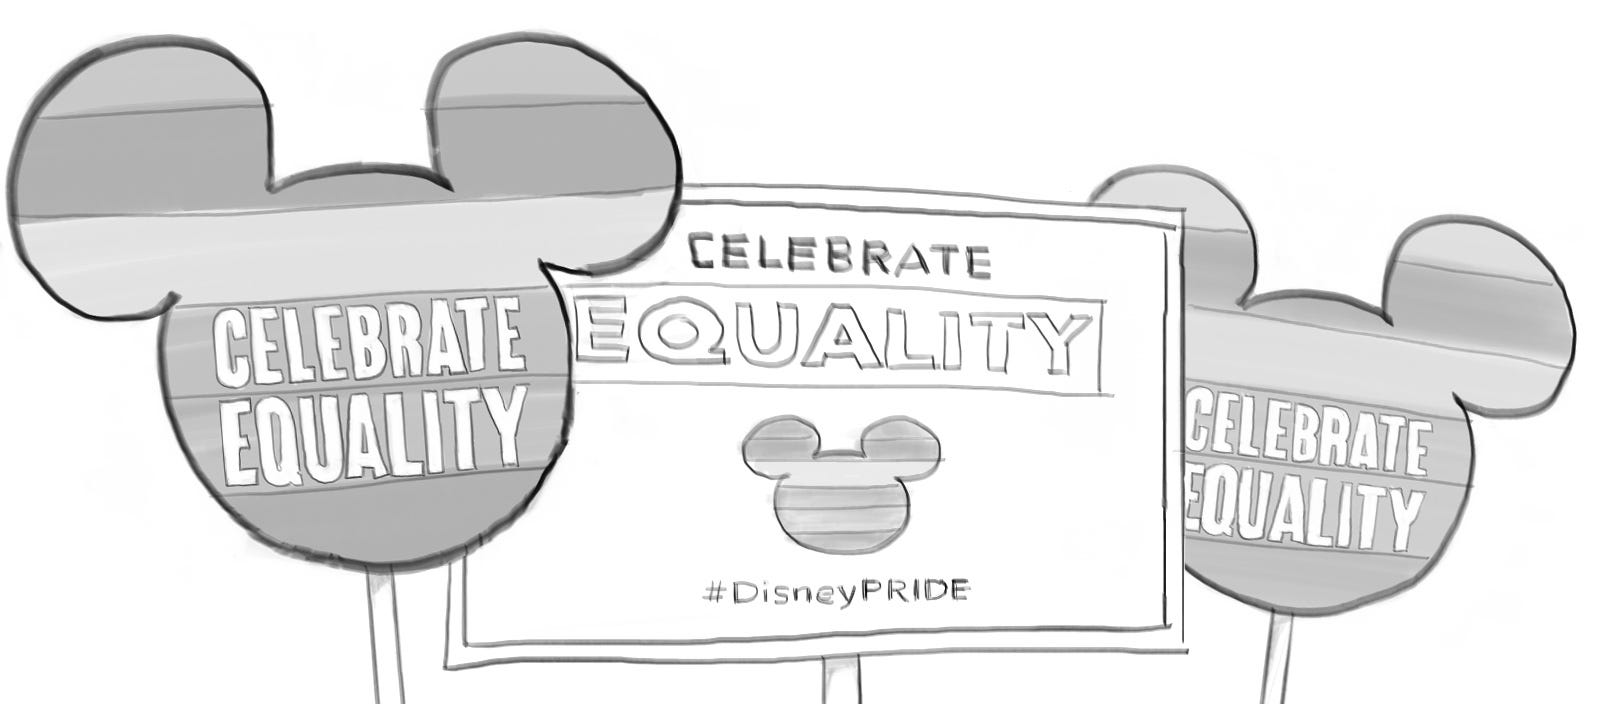 Disney workers strike on behalf of LGBTQ rights